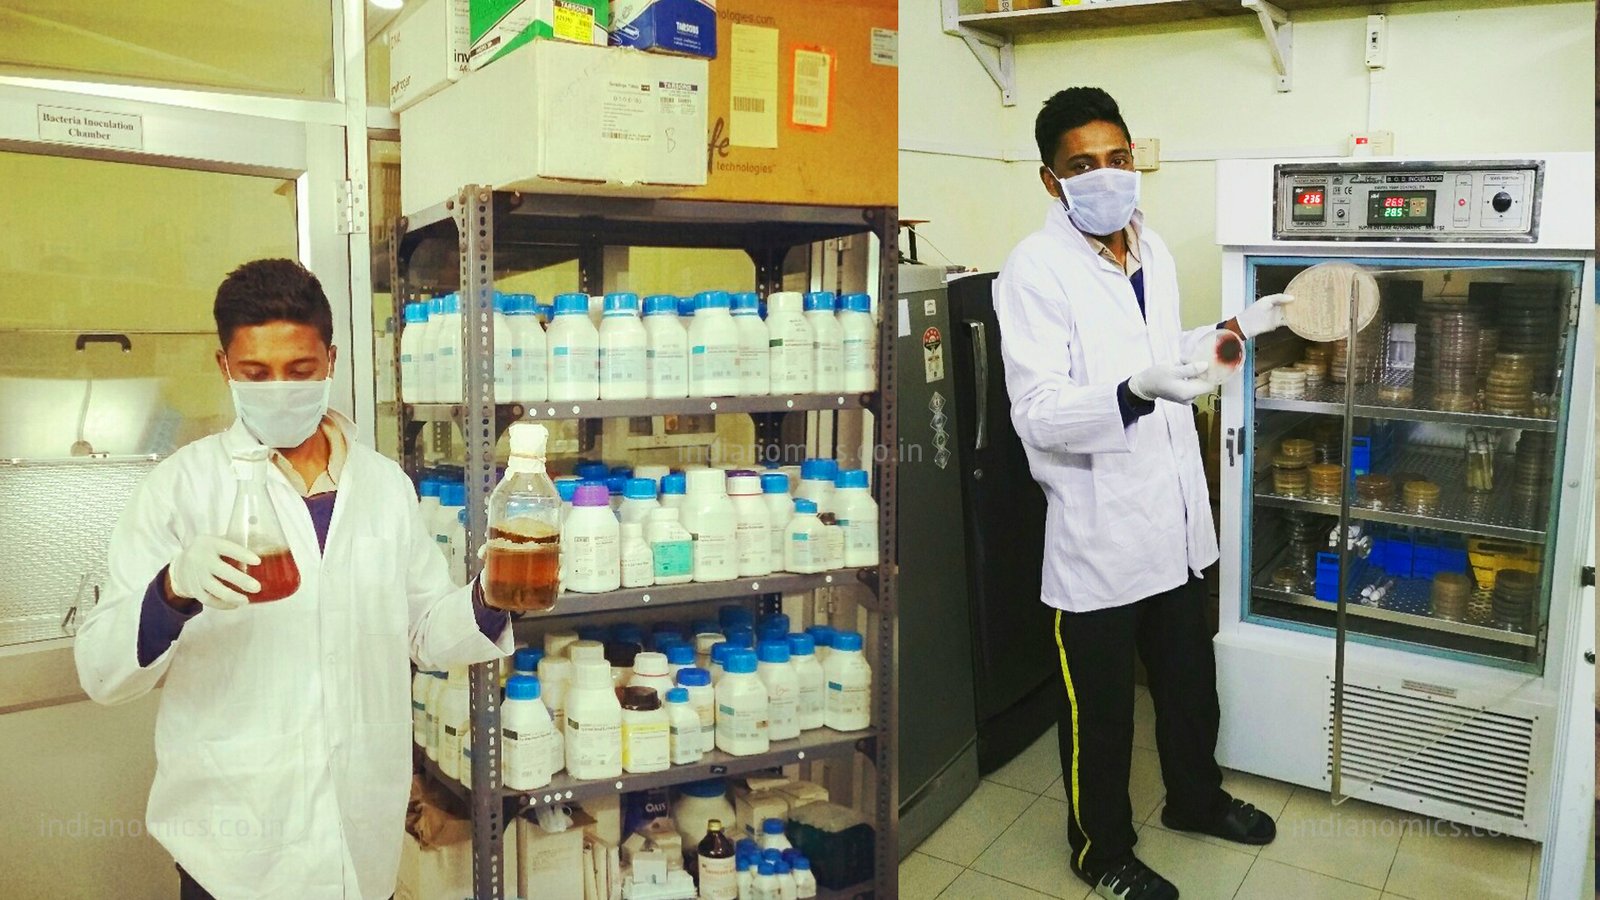 Vincent in his lab, Lab and Equipment, University of Mizoram